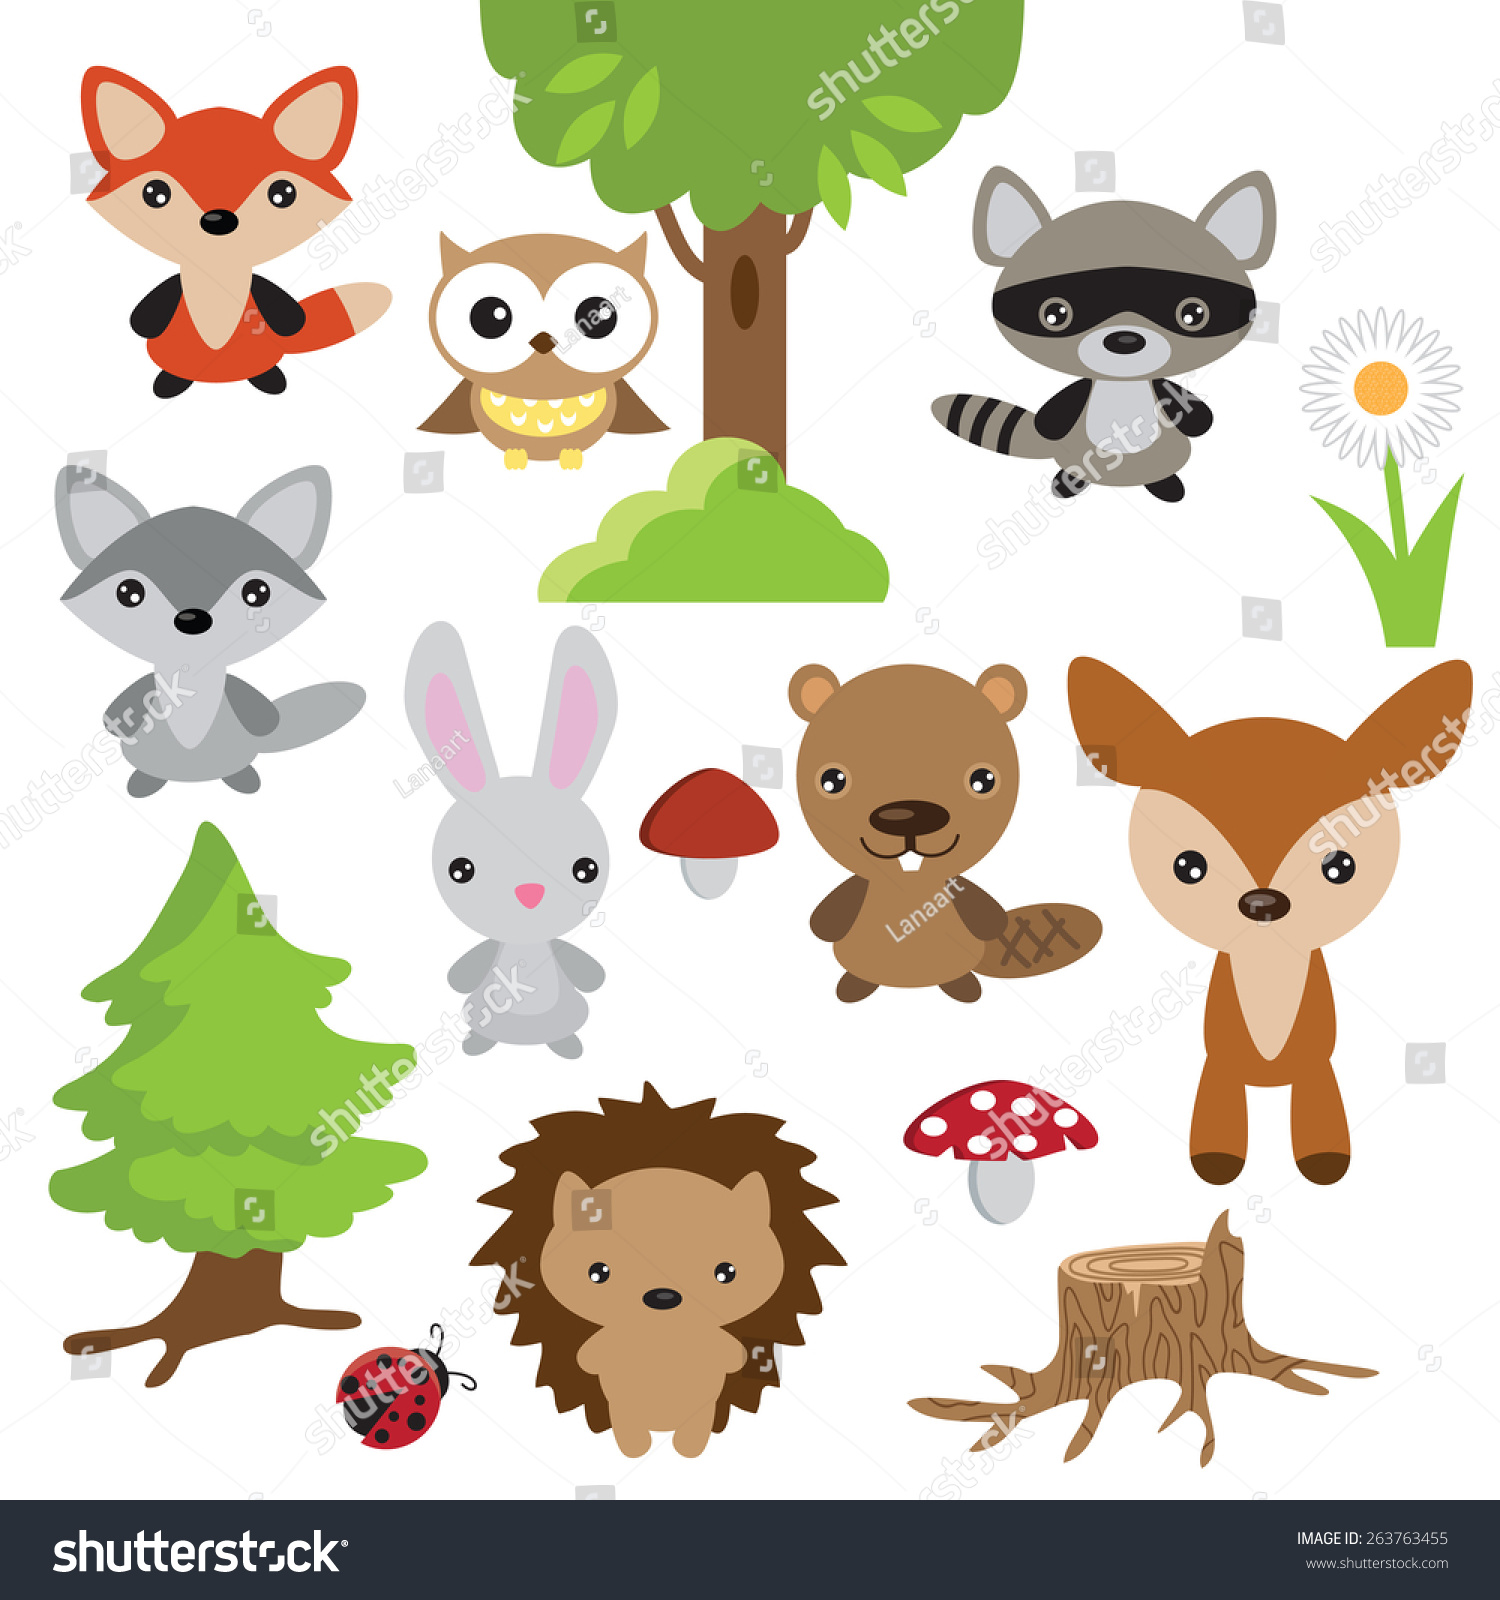 Forest Animal Vector Illustration - 263763455 : Shutterstock